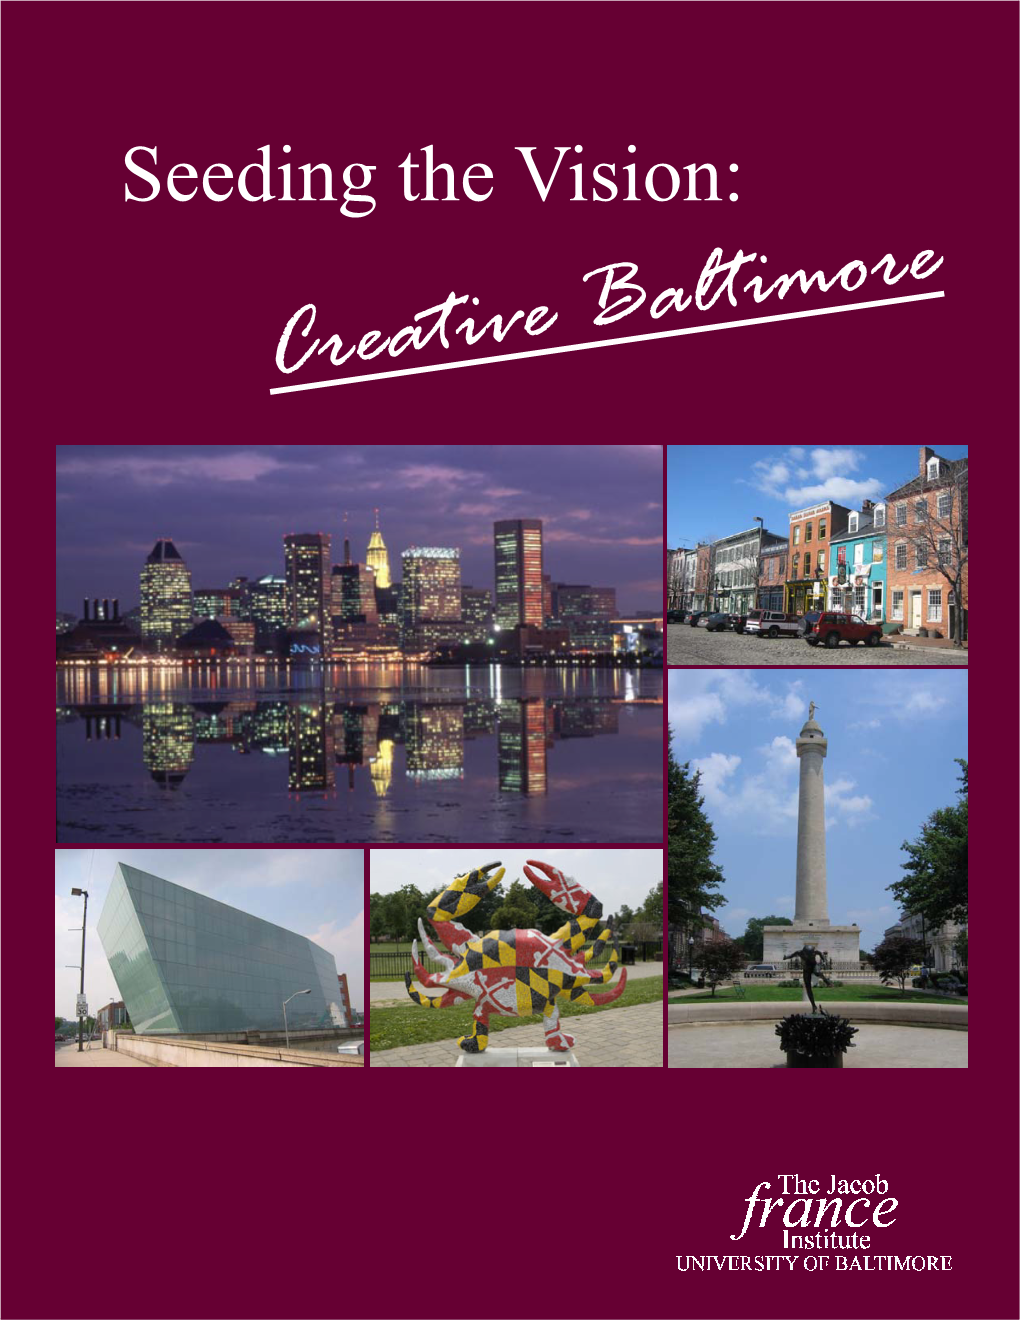 Seeding the Vision: Creative Baltimore